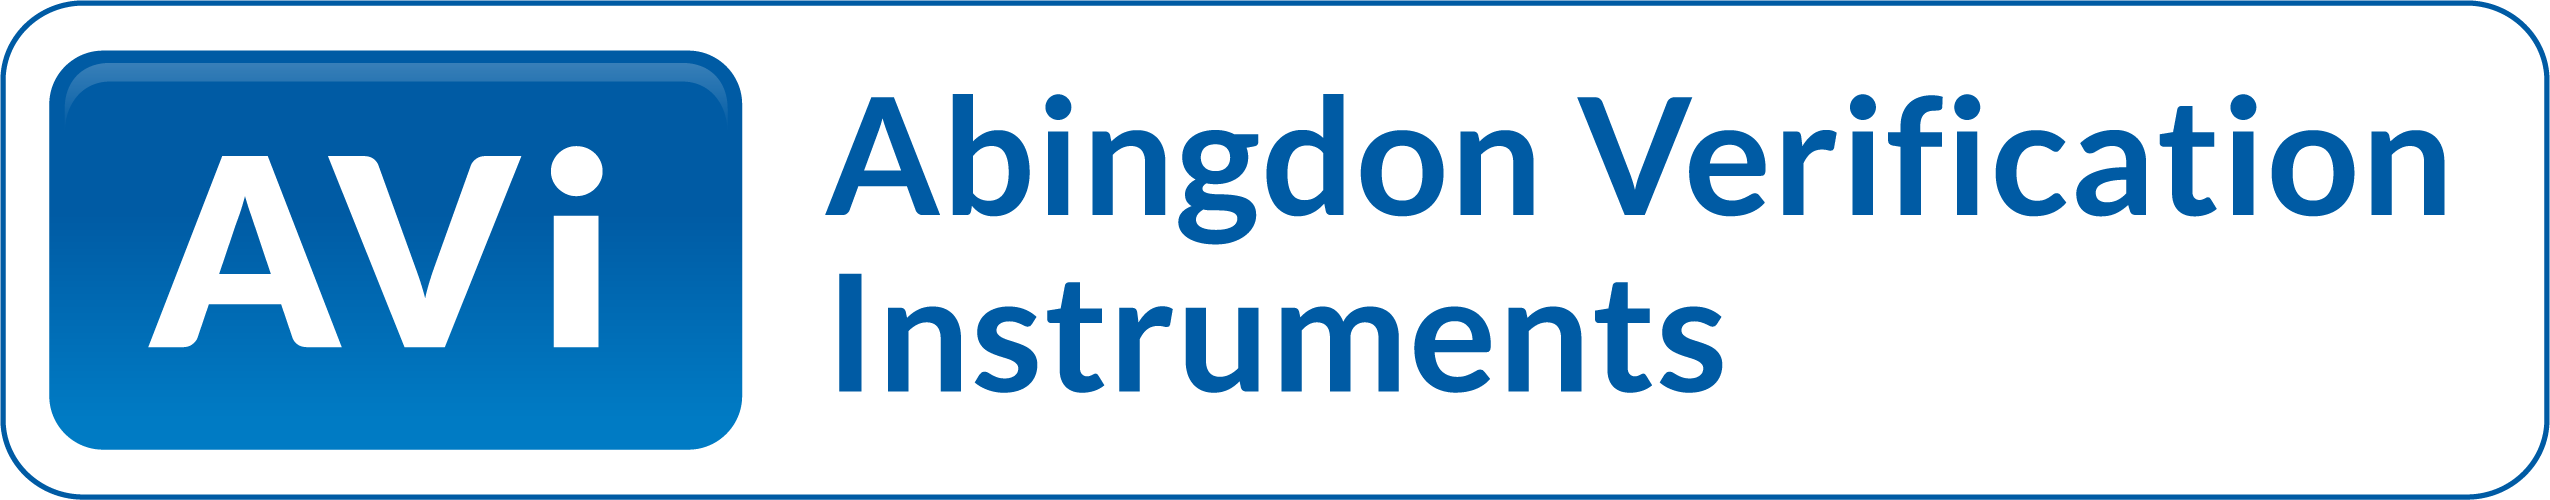 Abingdon Verification Instruments